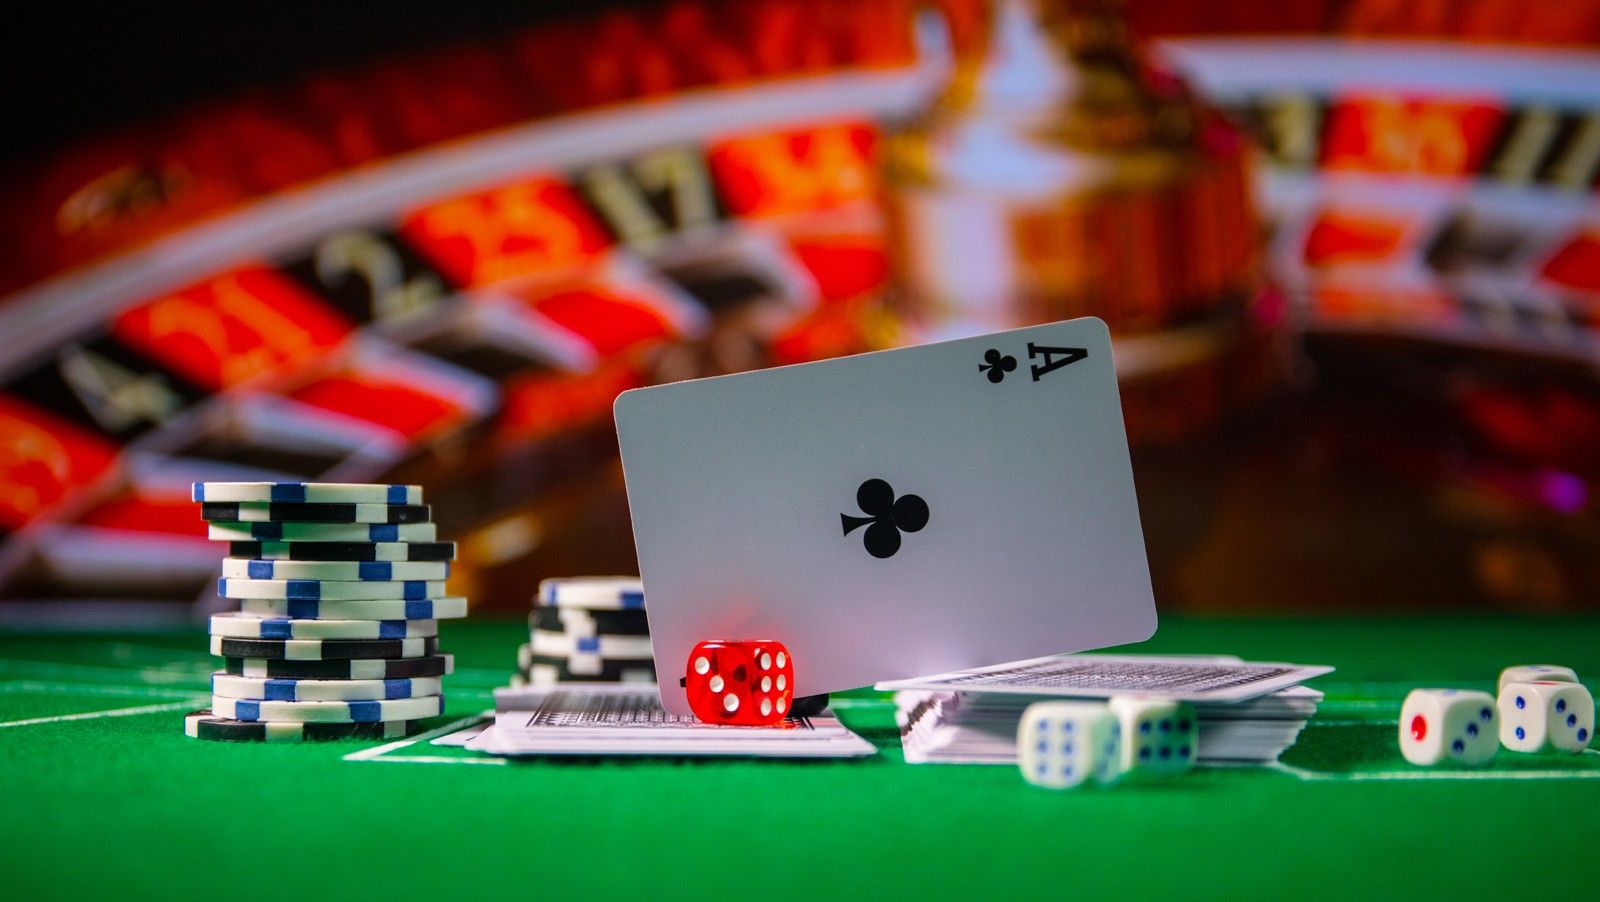 Marvelous traits of online casinos